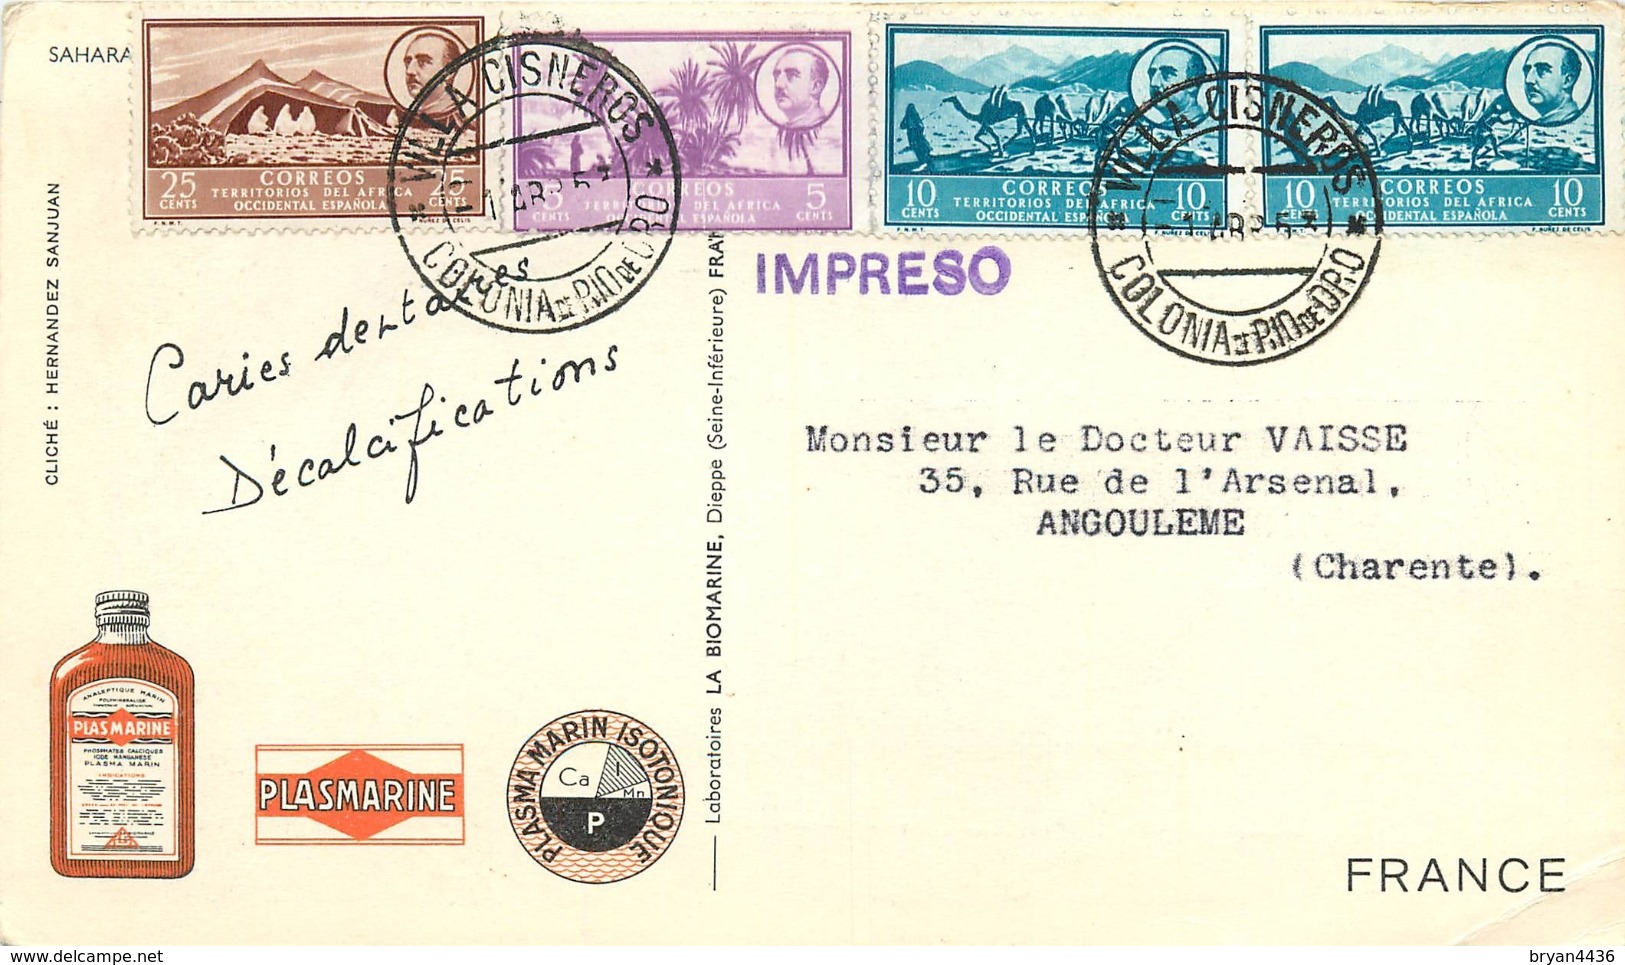 SAHAR - AFRIQUE OCCIDENTALE - 1953 - CORRESPONDANCE -  CARTE  BEDOIN  -  OBLITERATION SUR 4 TIMBRES  "FRANCO". - Asturias & Leon